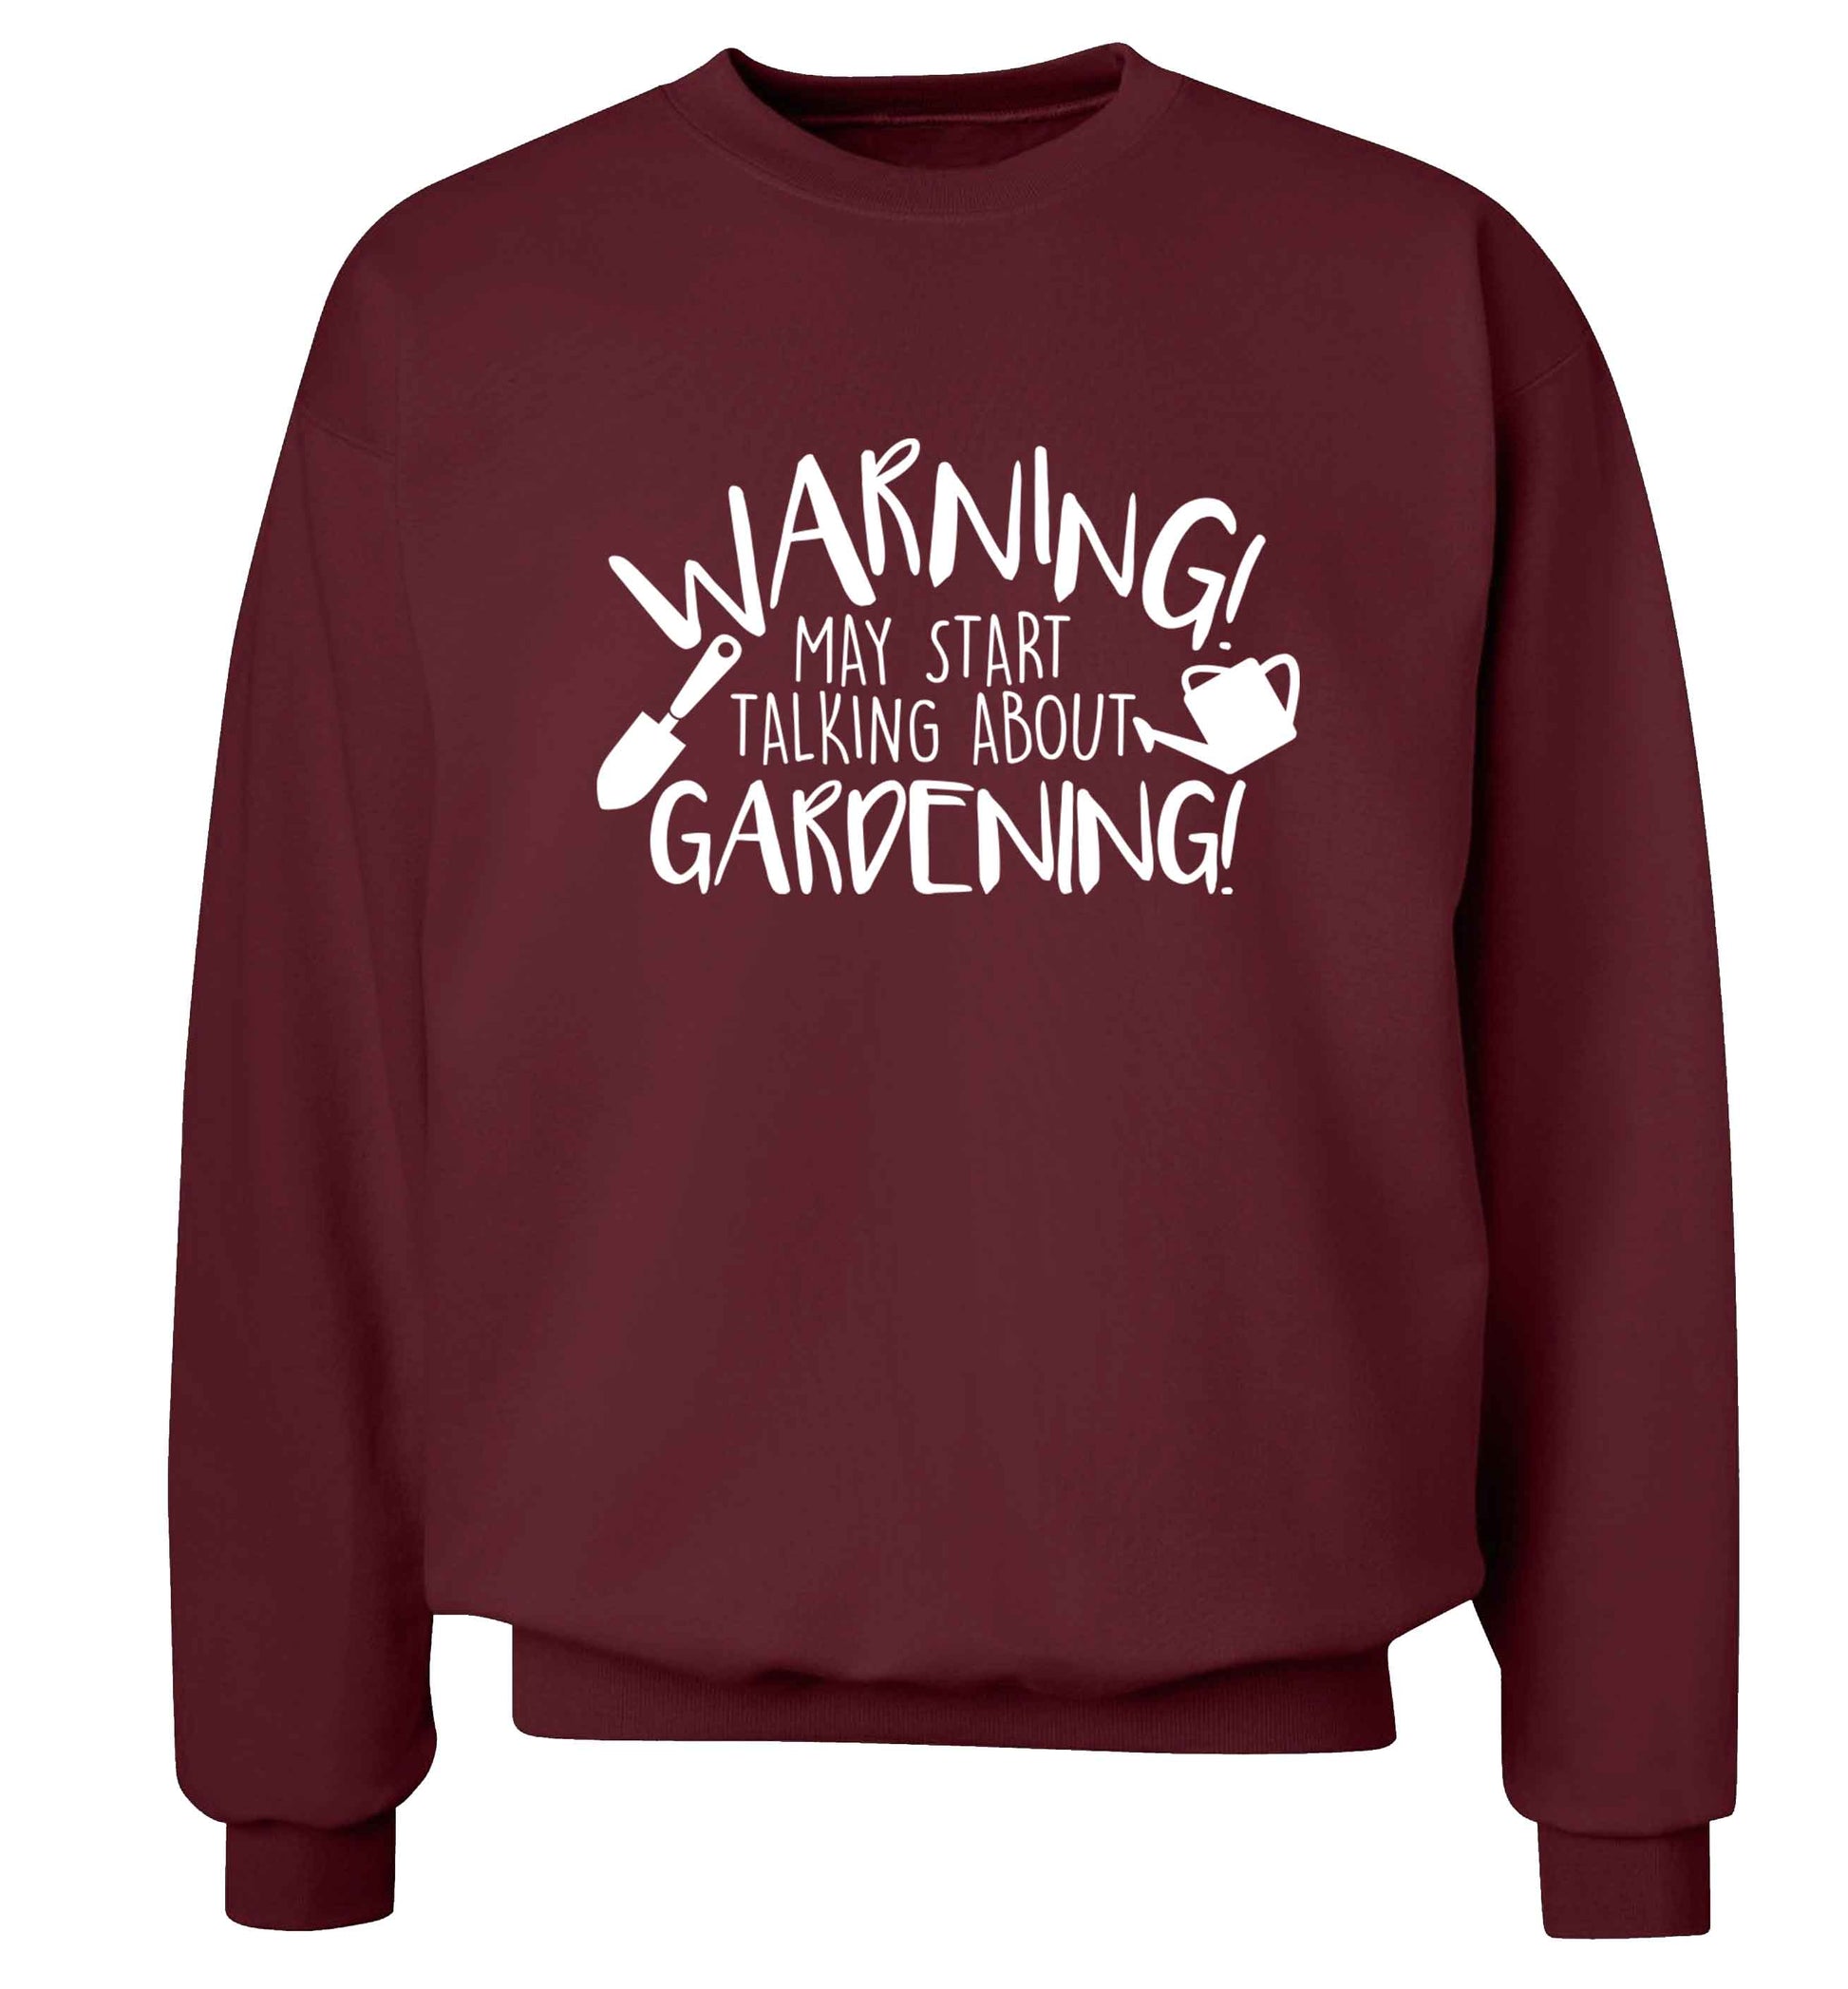 Warning may start talking about gardening Adult's unisex maroon Sweater 2XL